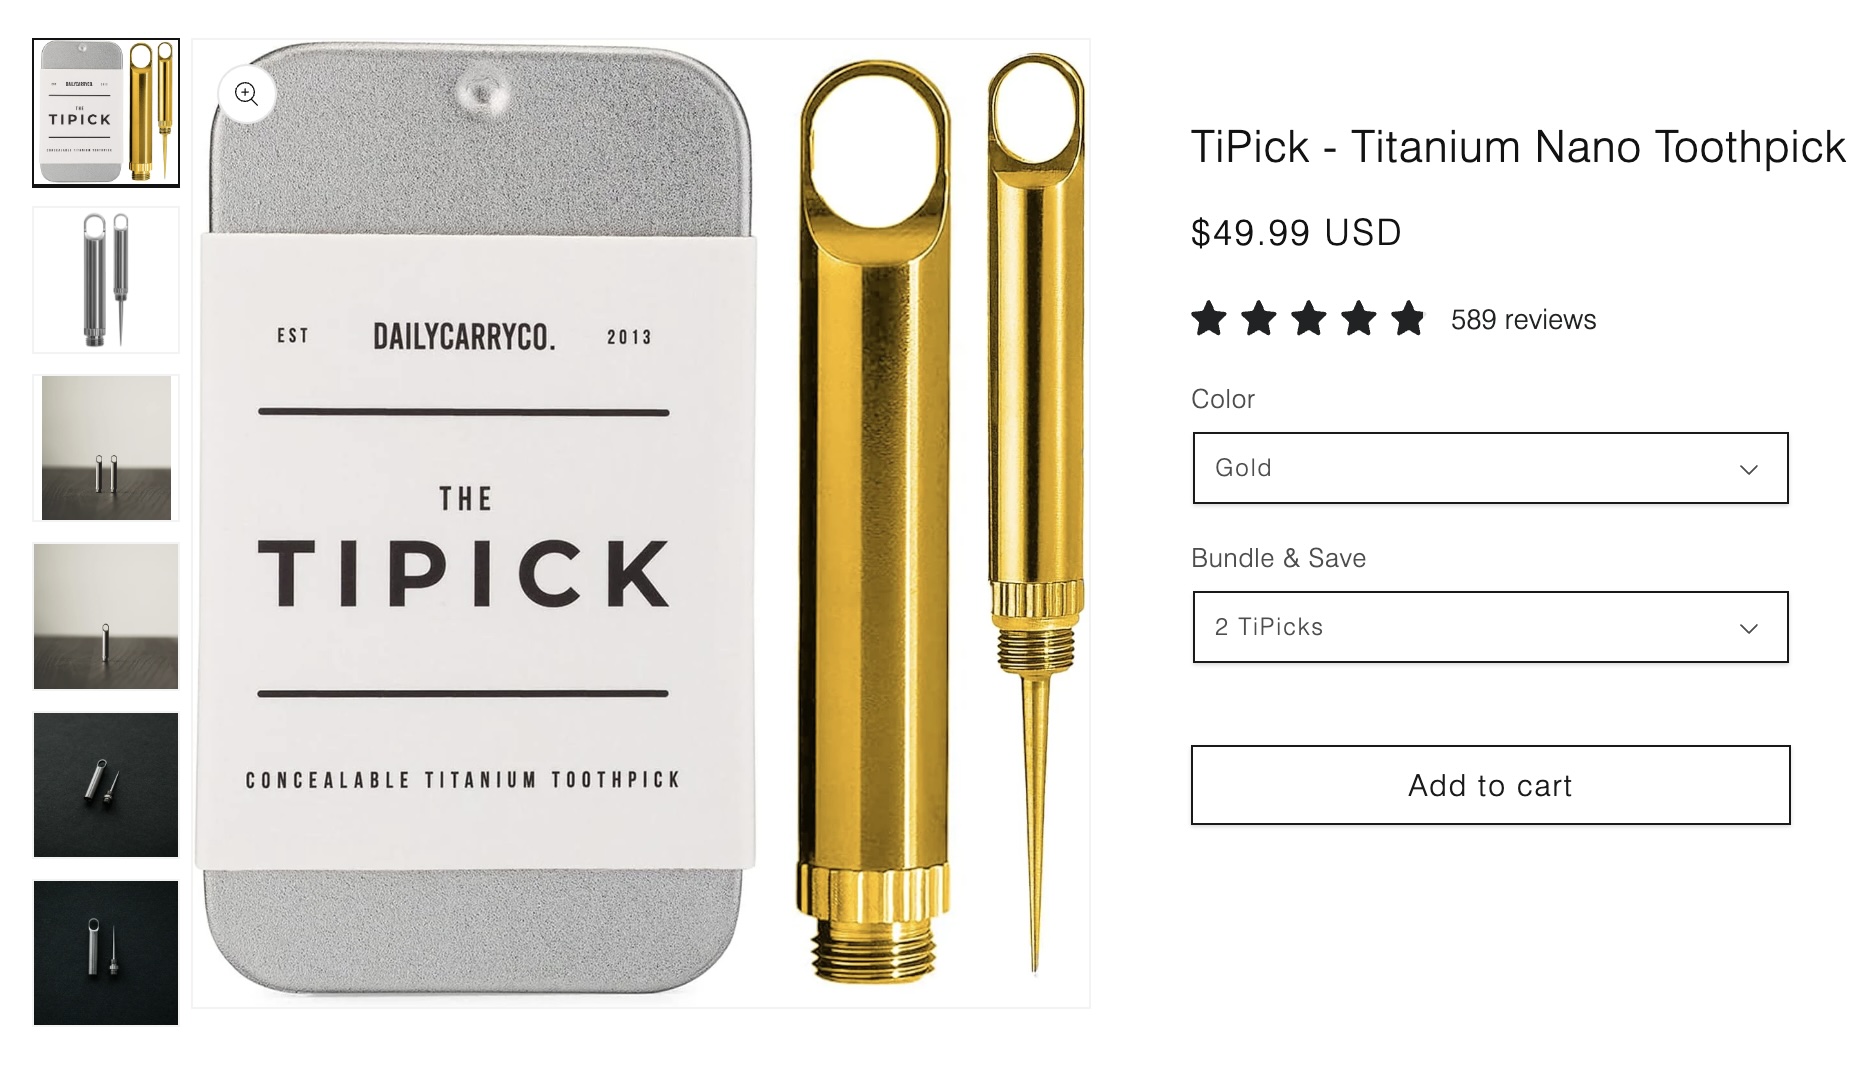 TiPick - Titanium Nano Toothpick $49.99 USD